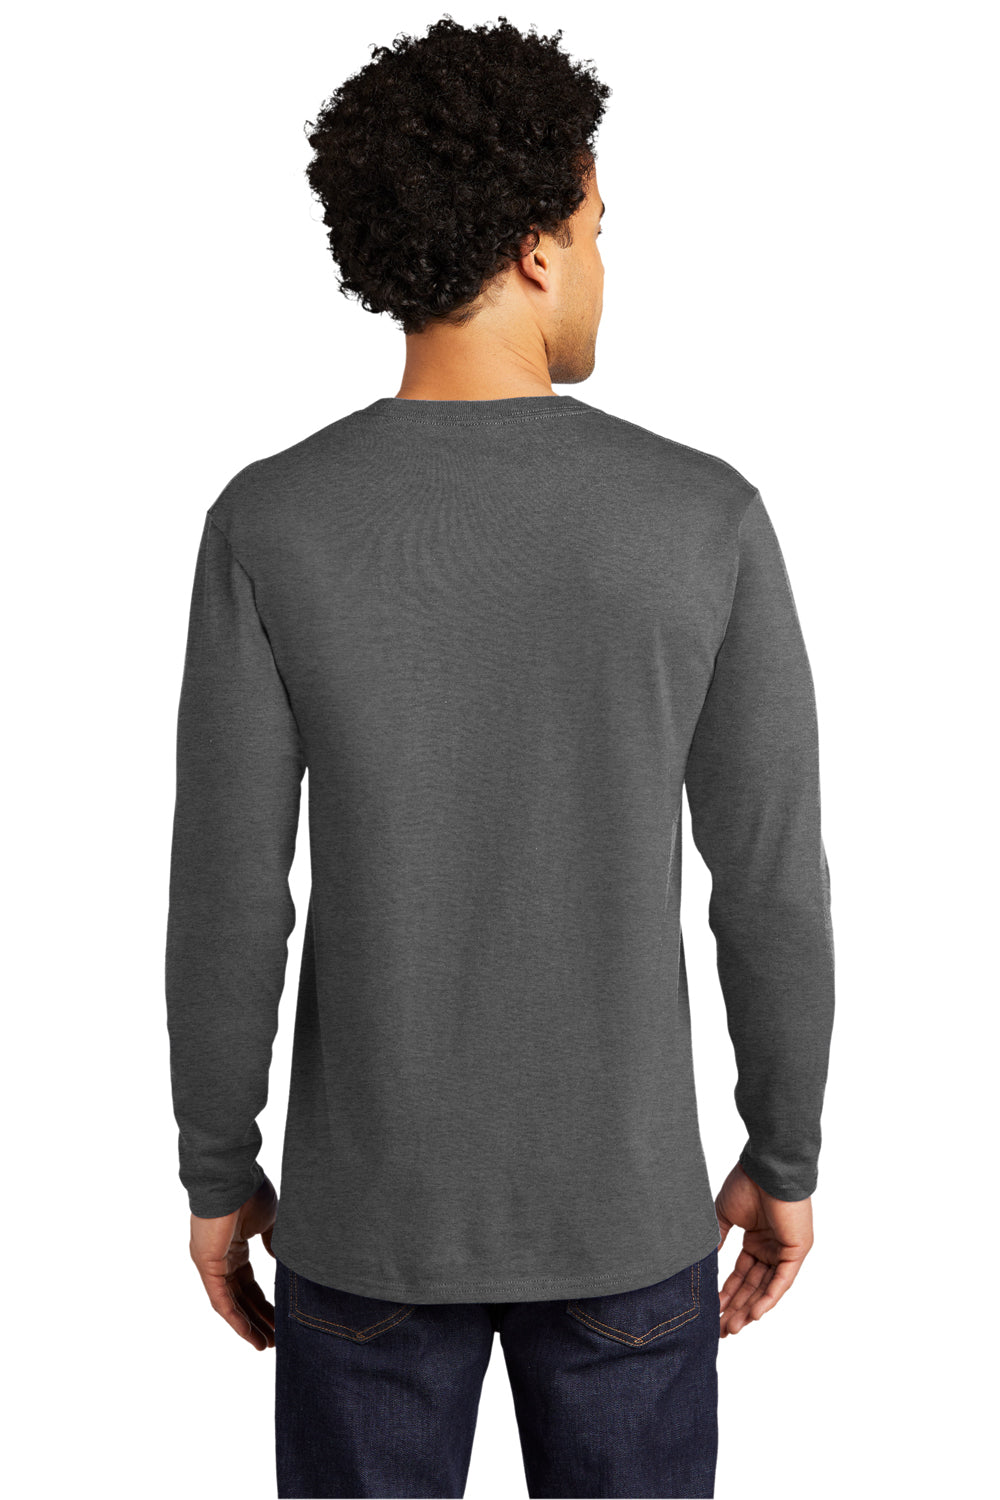 Port & Company Mens Bouncer Long Sleeve Crewneck T-Shirt Heather Dark Grey Side